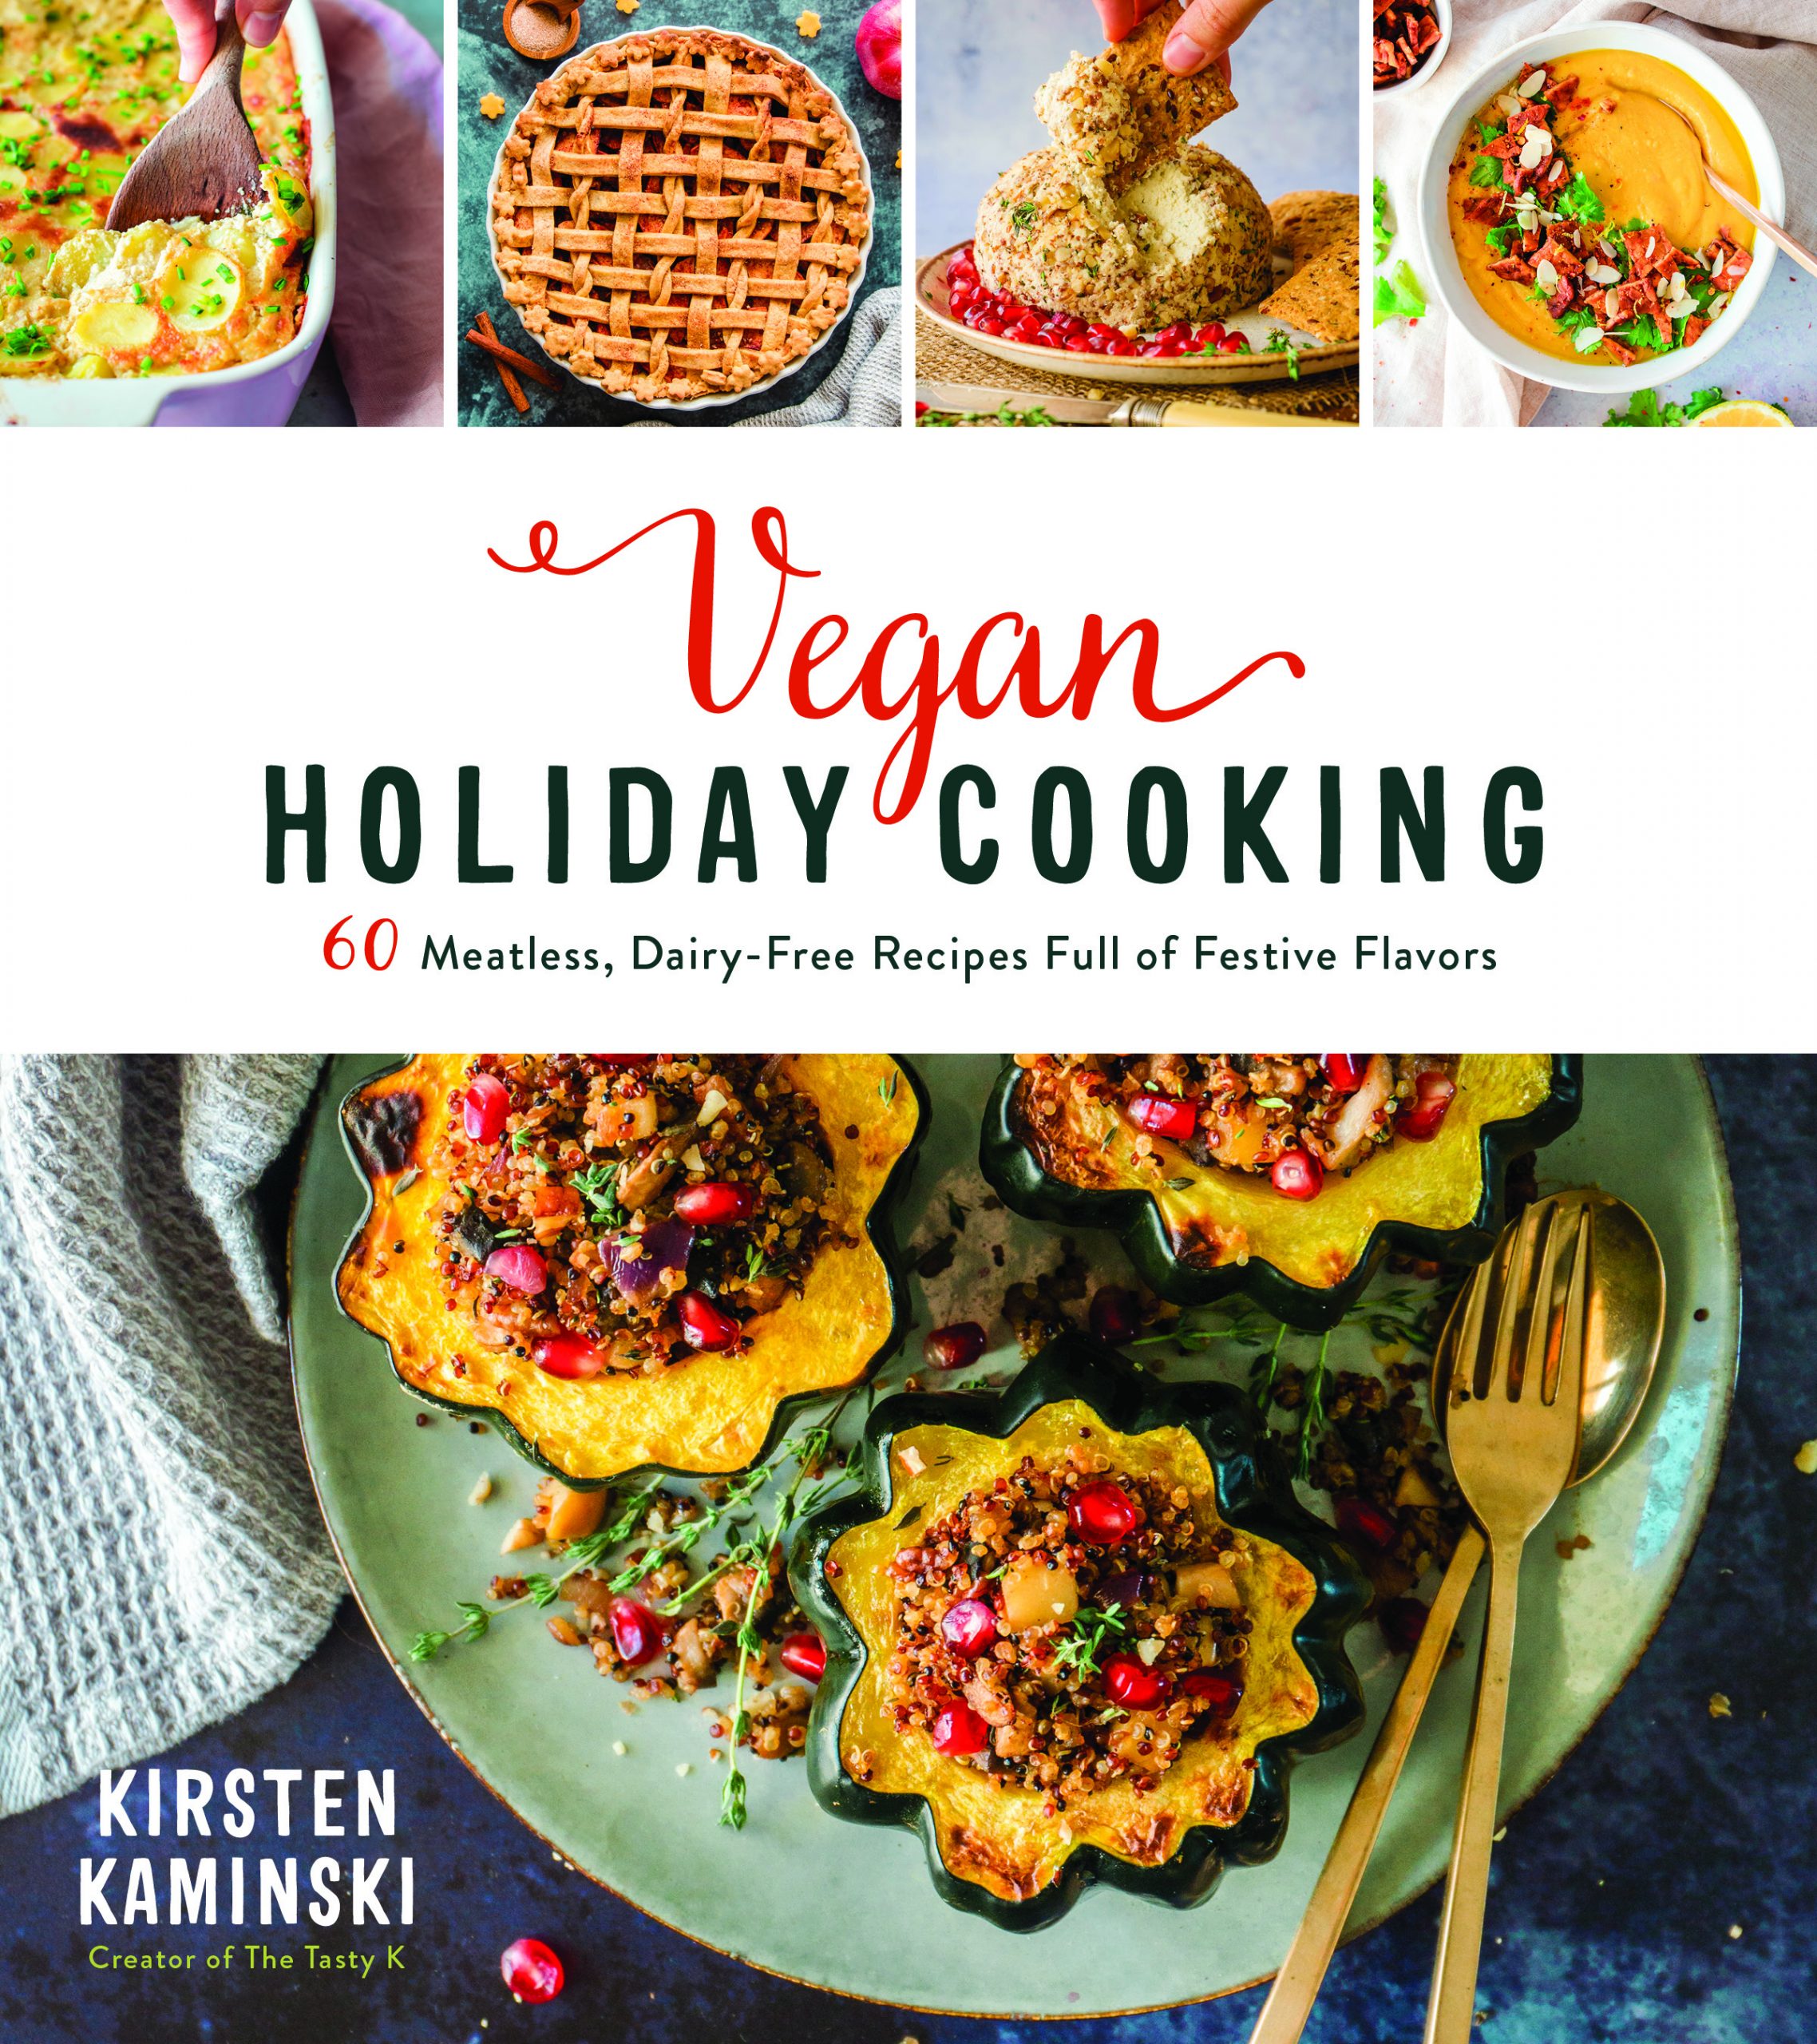 Cookbook Vegan Holiday Cooking by Kirsten Kaminski